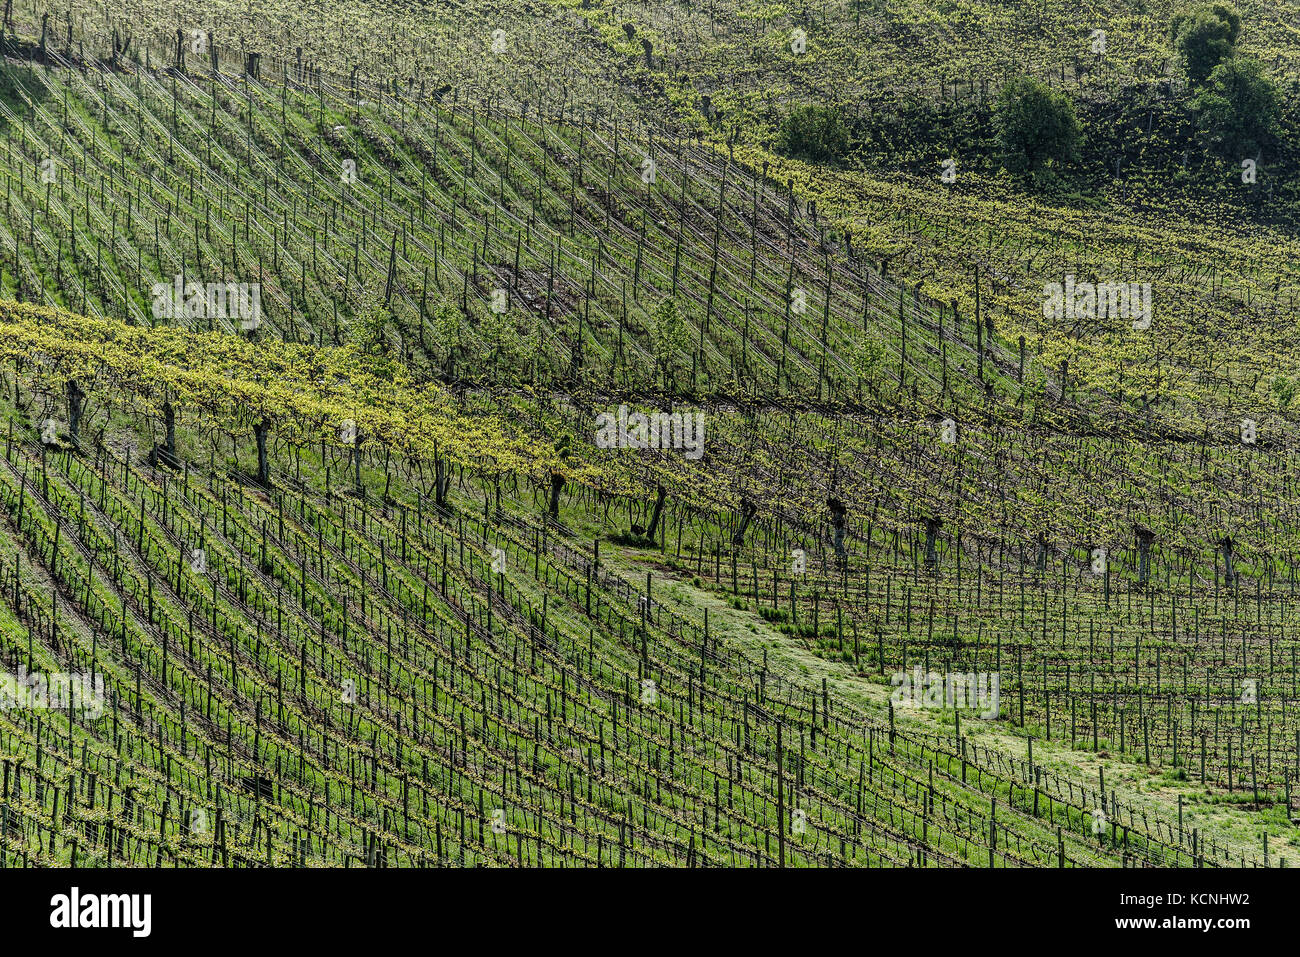 vineyards of Vale dos Vinhedos, Grande do Sul, Brazil Stock Photo